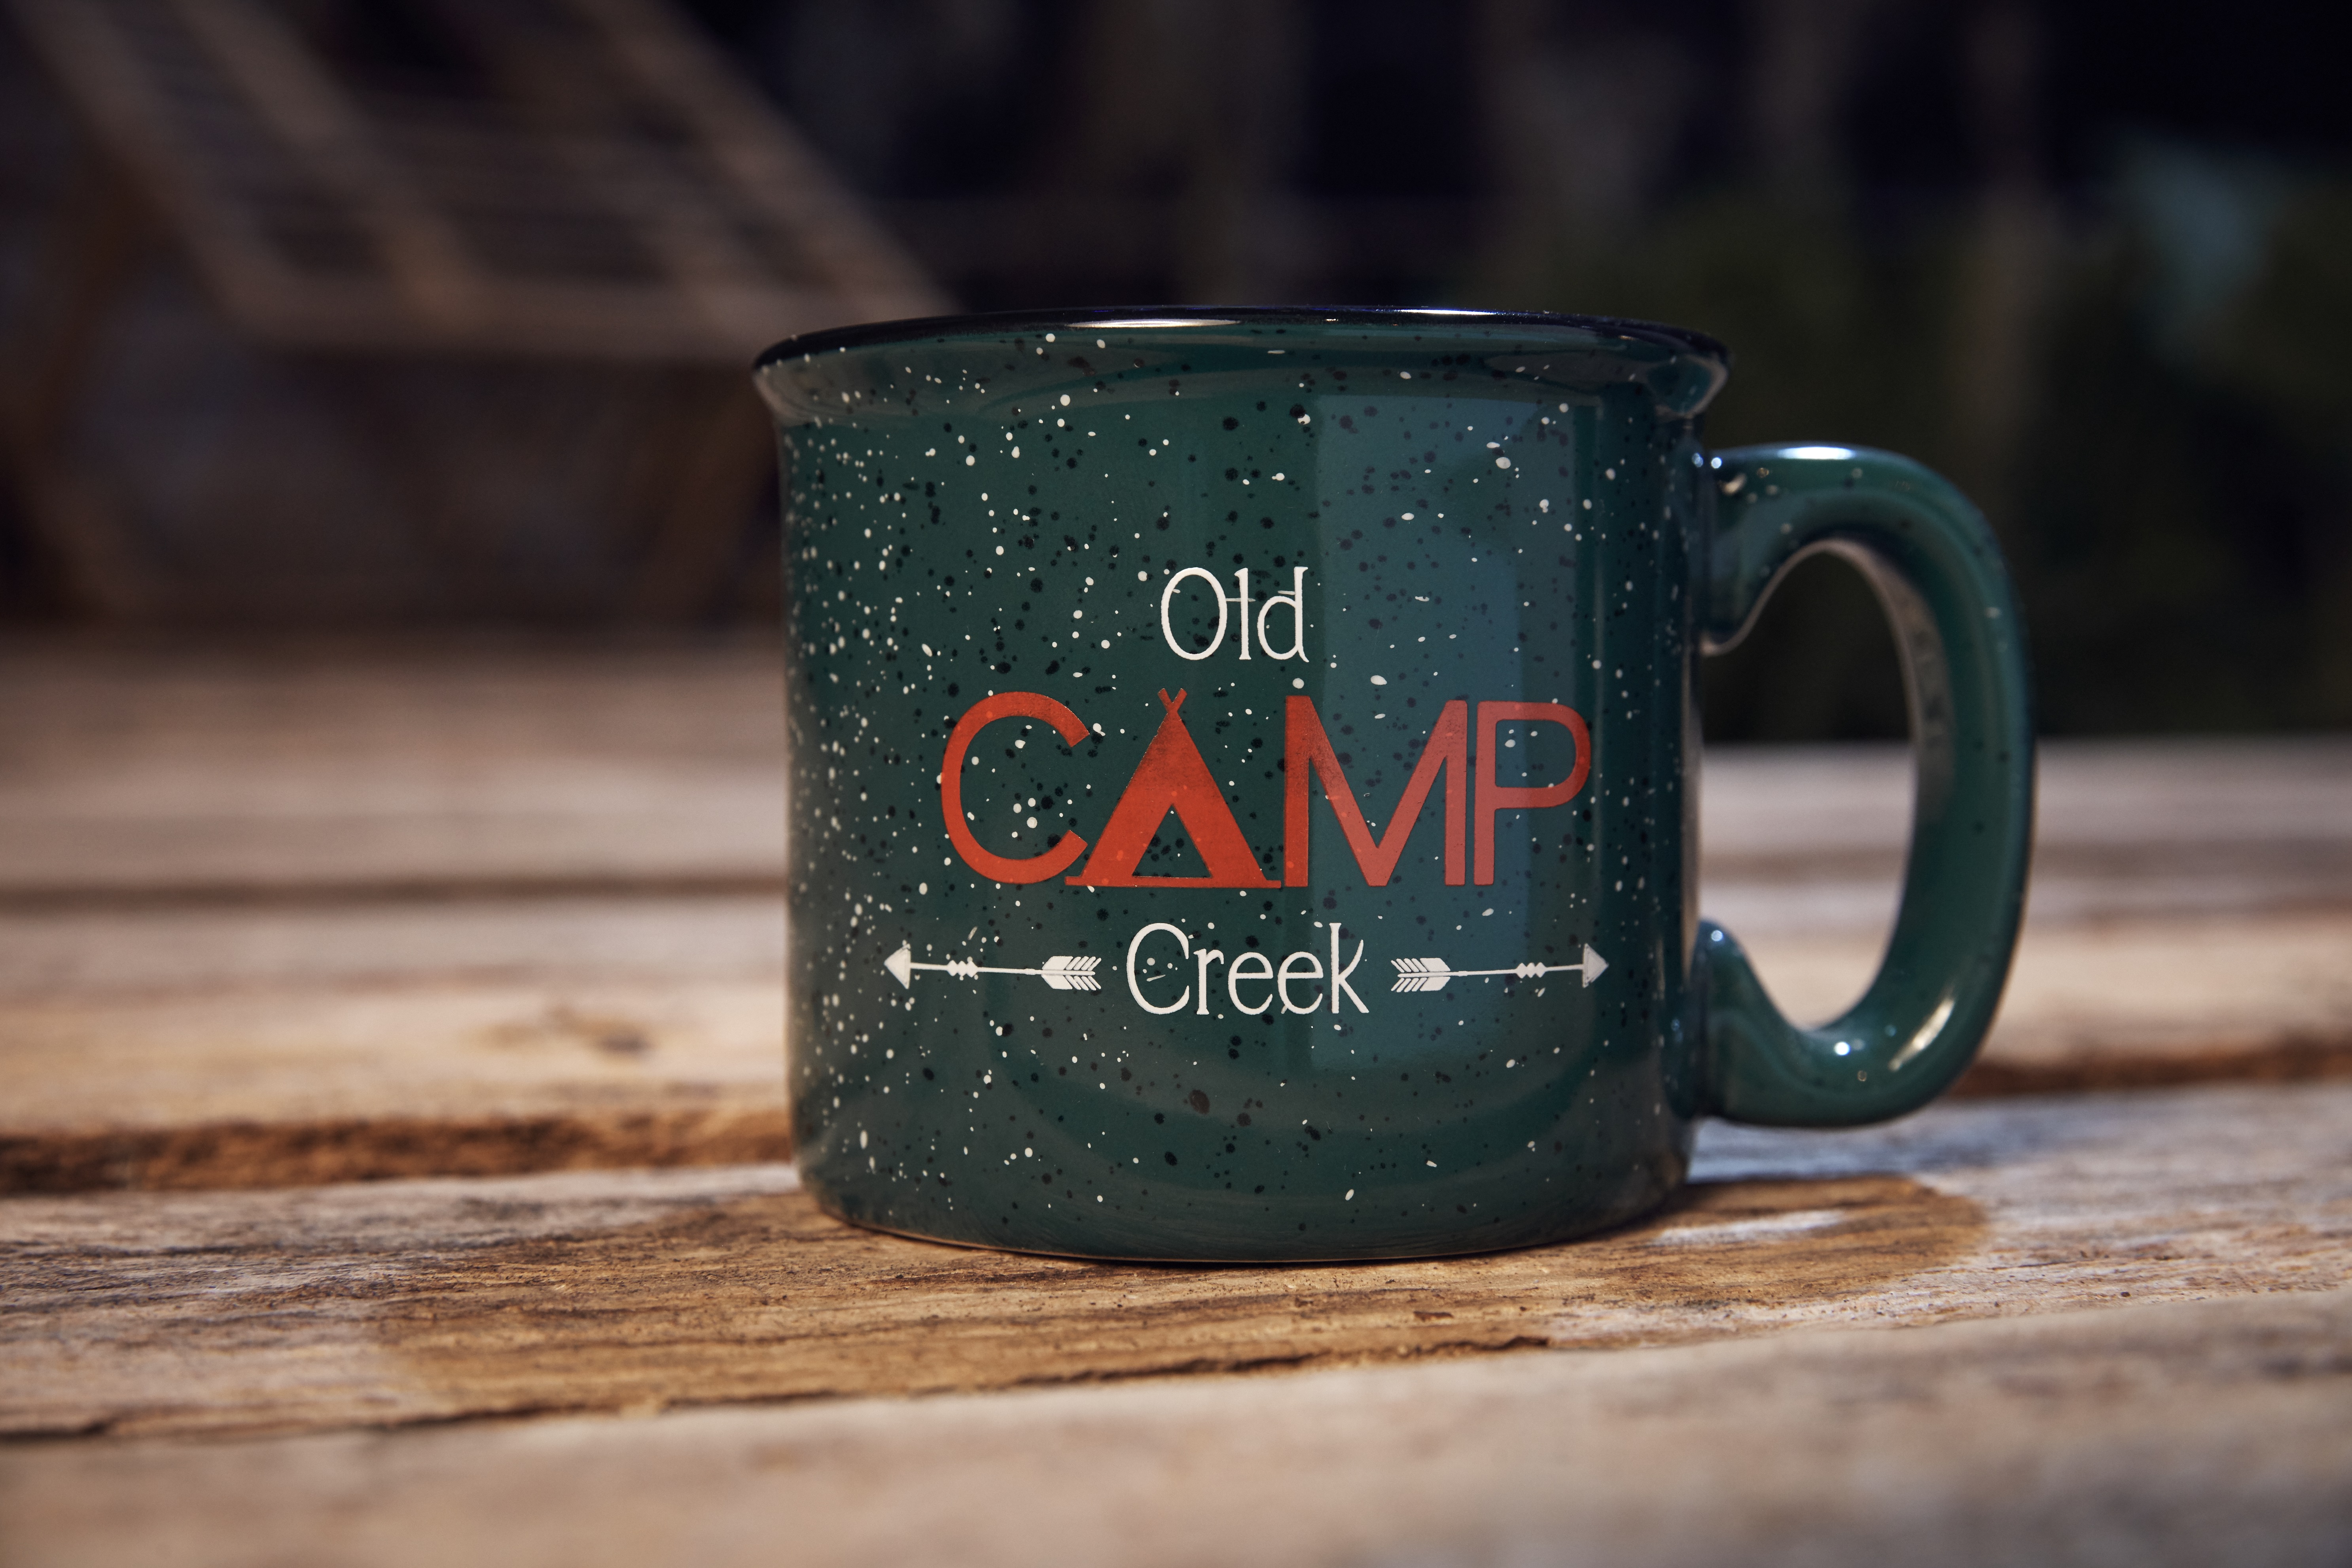 Boondocks Old Camp Creek Campfire Mug; Photo via Opry/Schmidt Public Relations